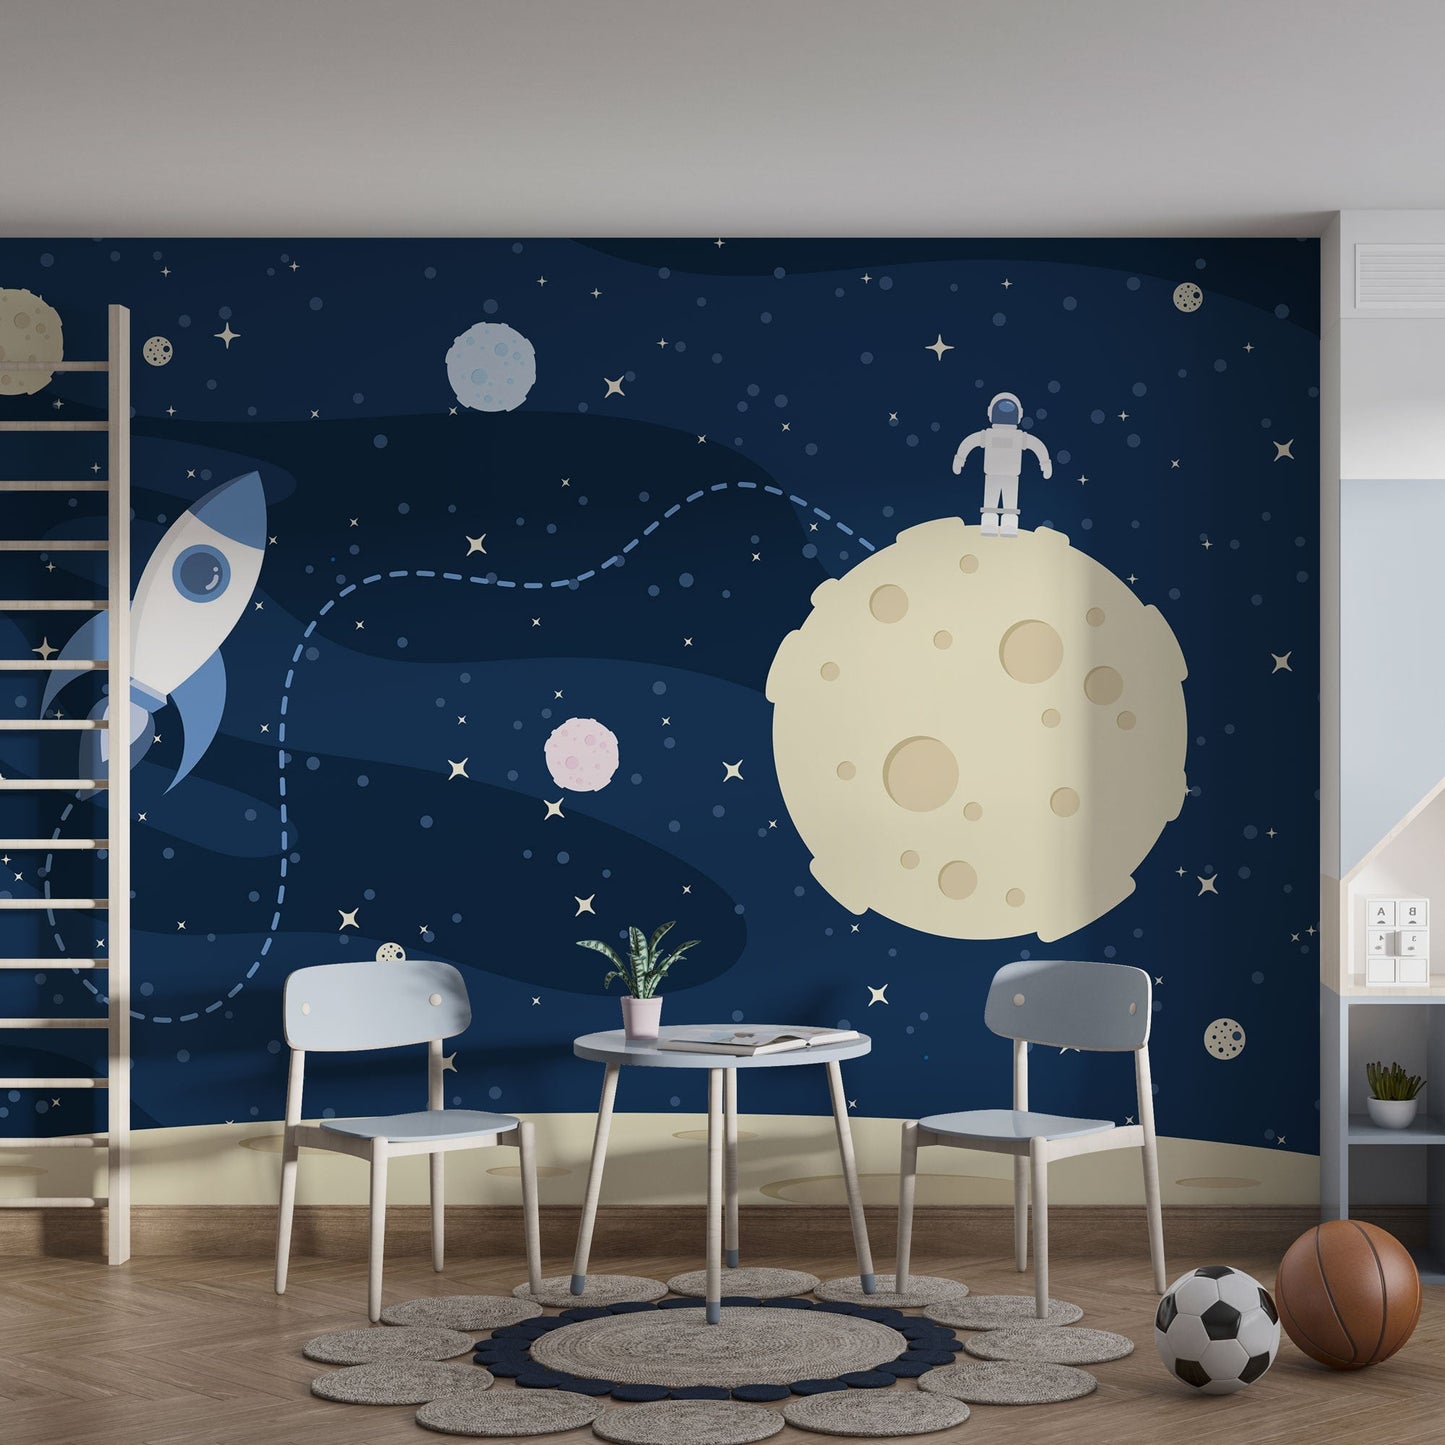 Children's Wallpaper Space With Astronaut